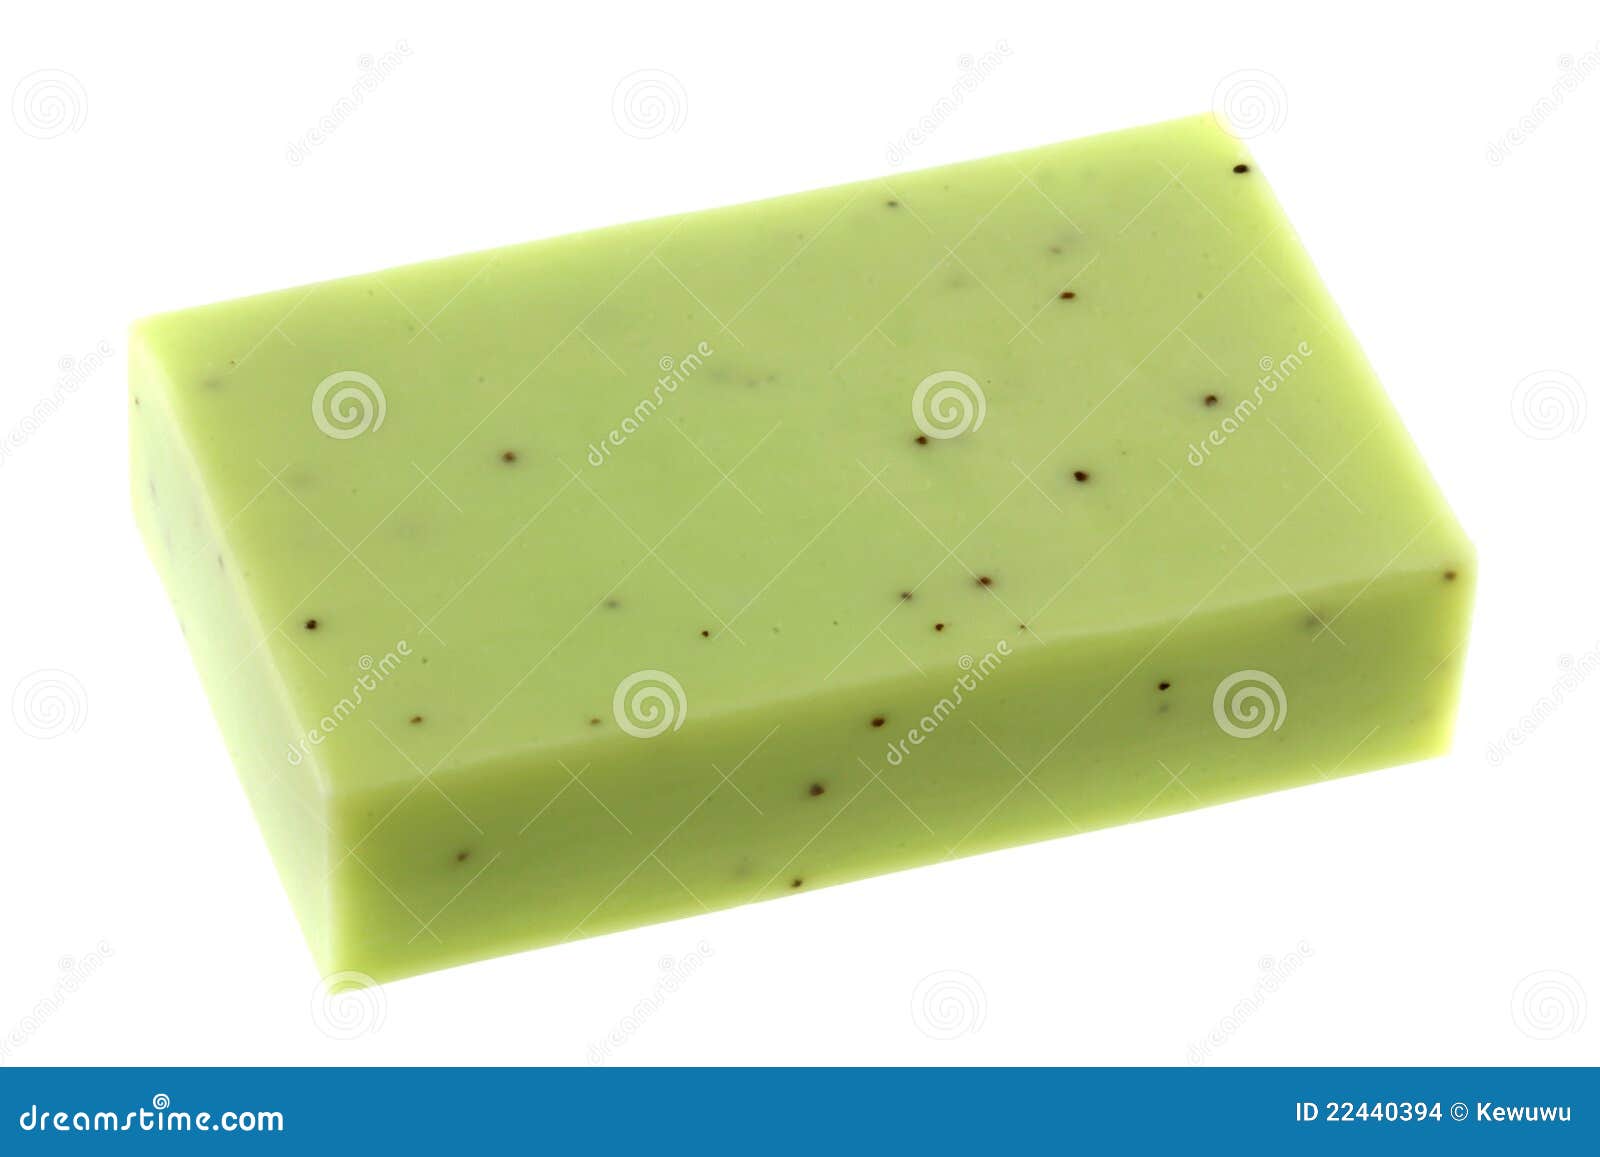 lemongrass glycerin bar soap with scrub beads